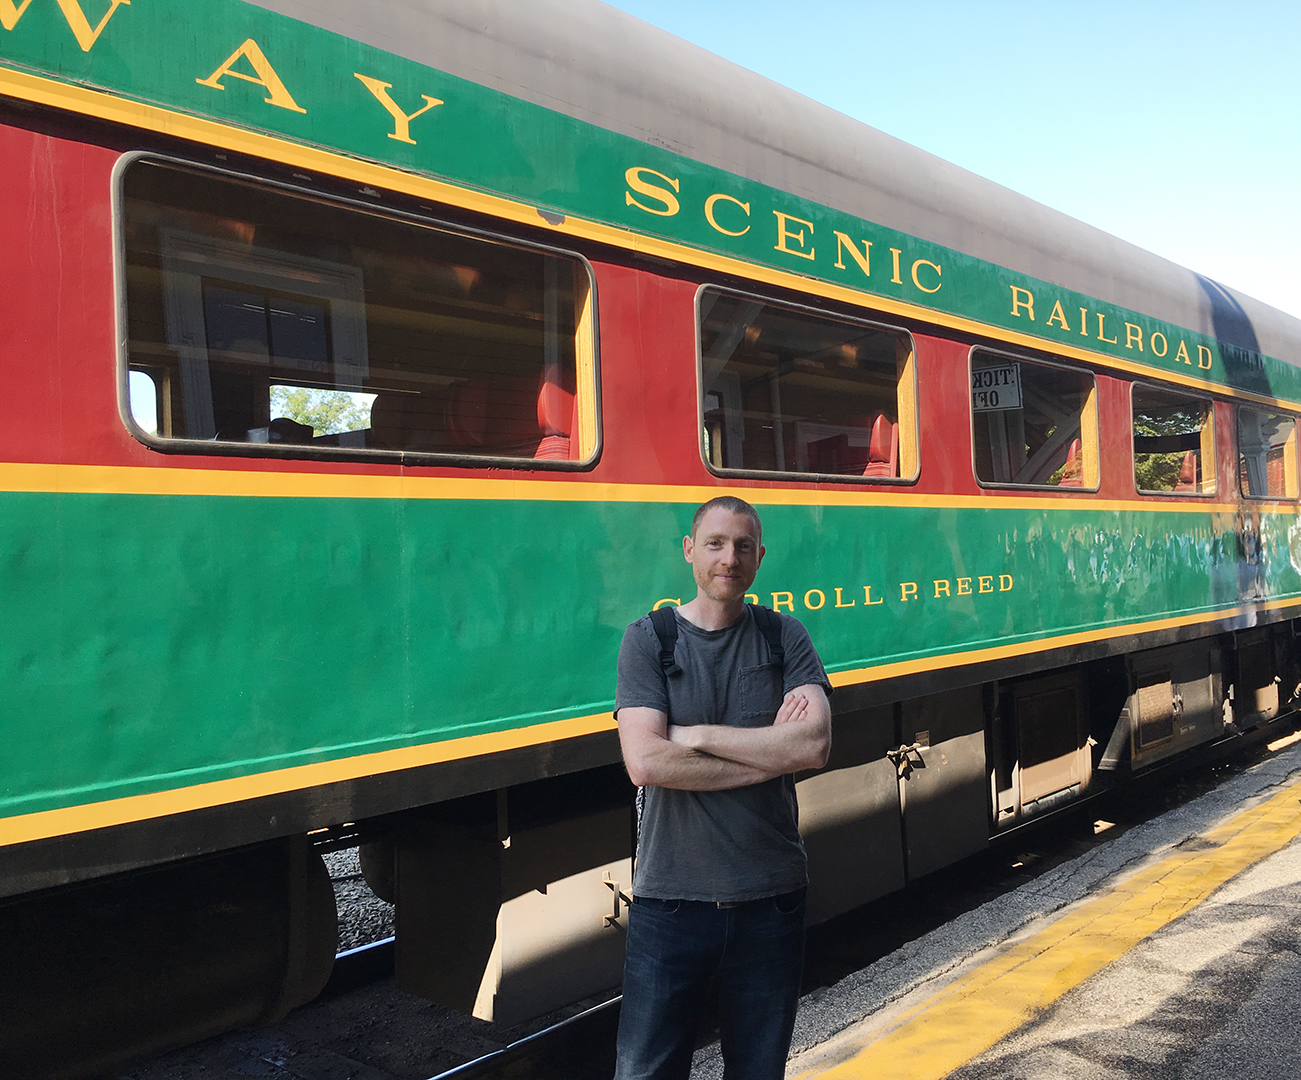 Conway Scenie Railway